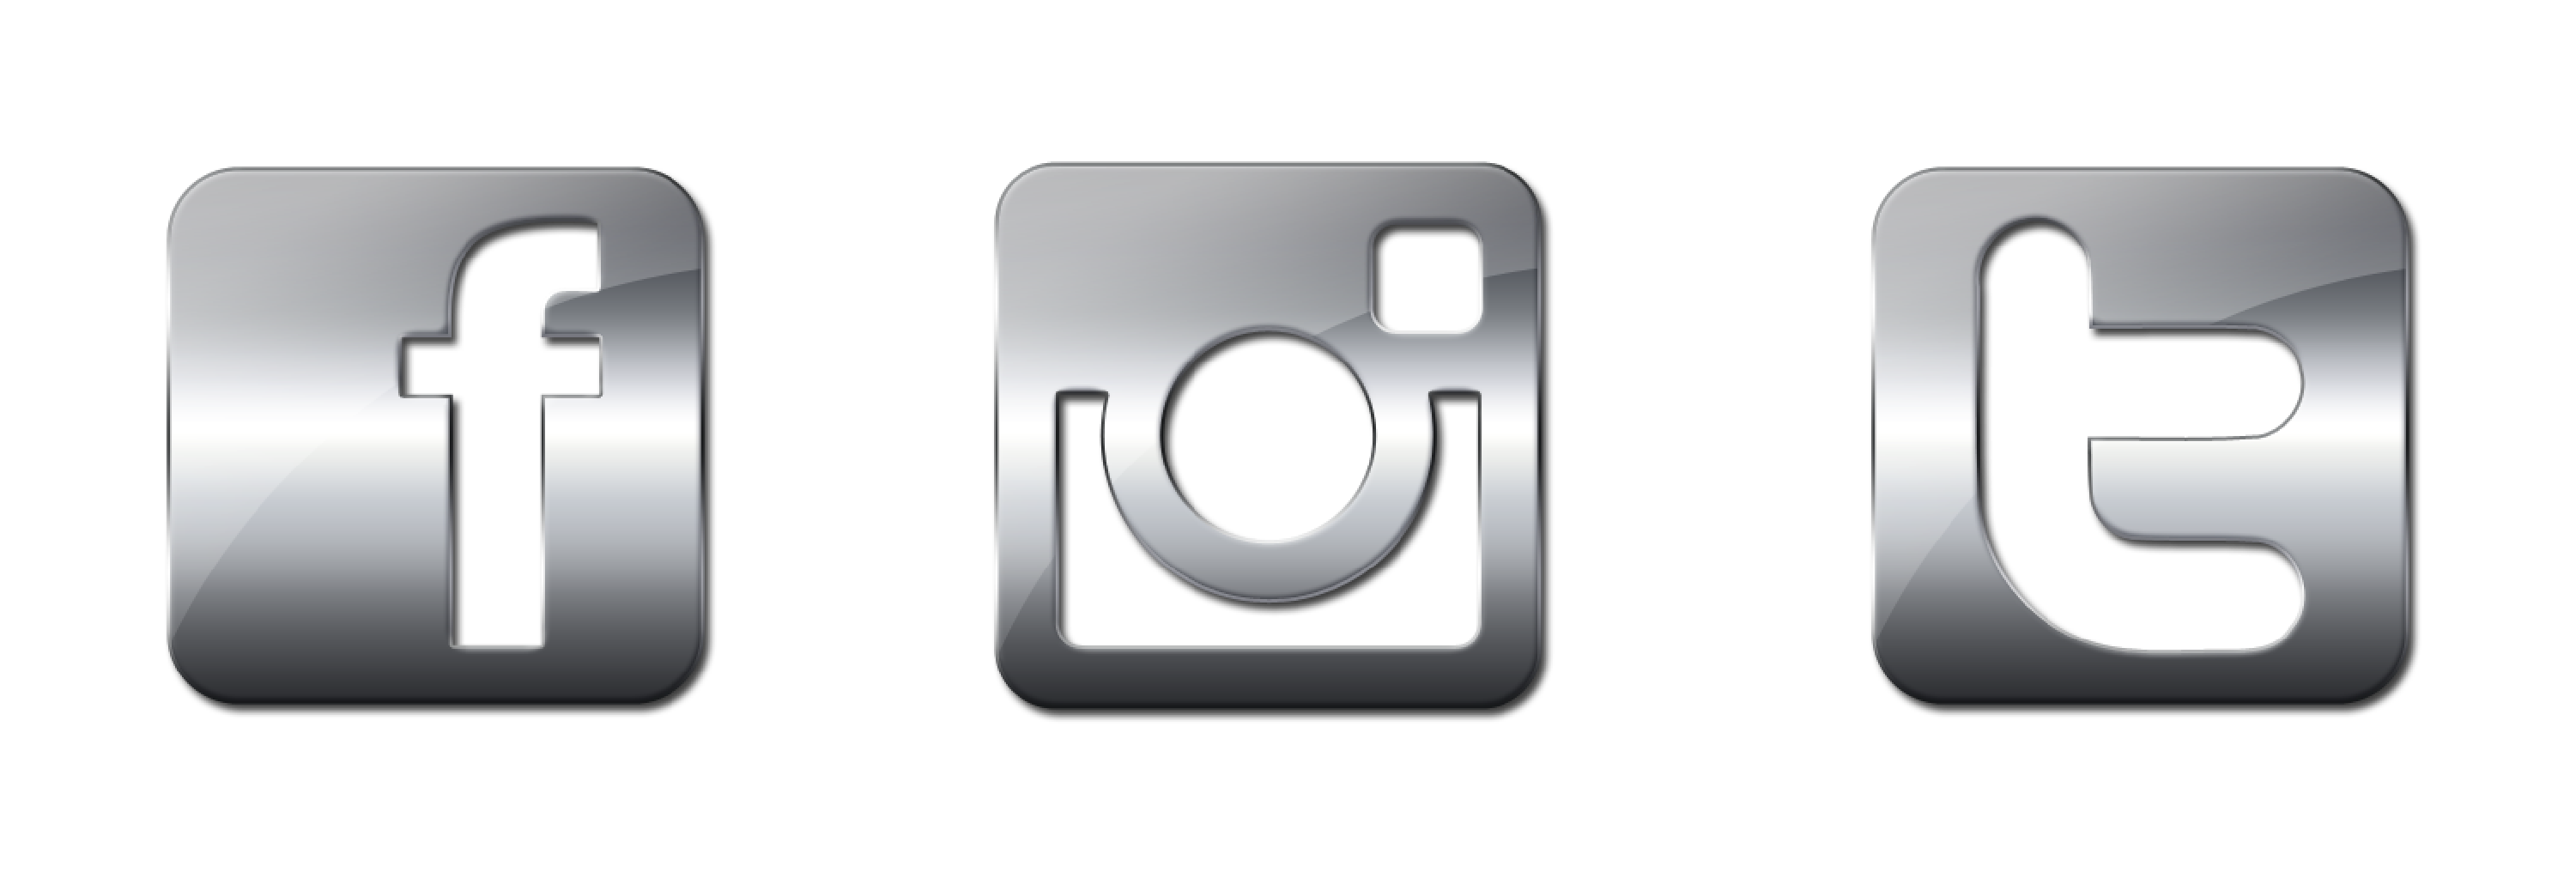 Download Instagram Icons Media Computer Facebook Social Logo Hq Png Image Freepngimg